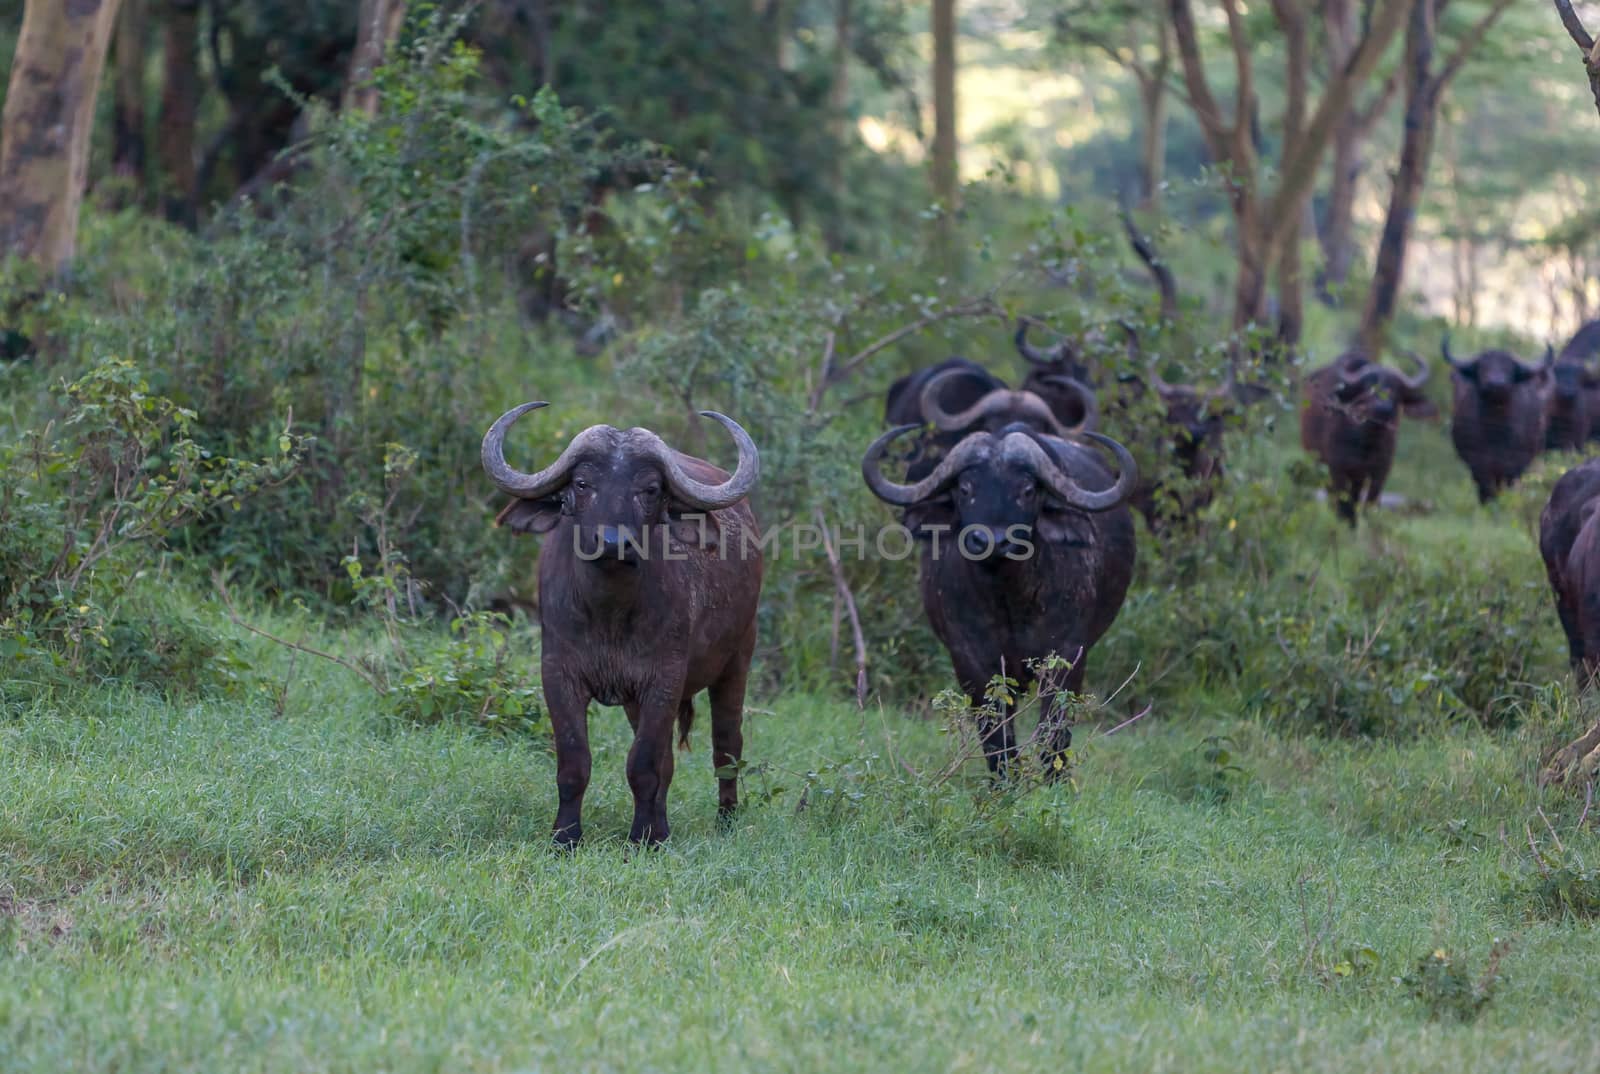 The wild  black African Buffalos in Kenya, Africa